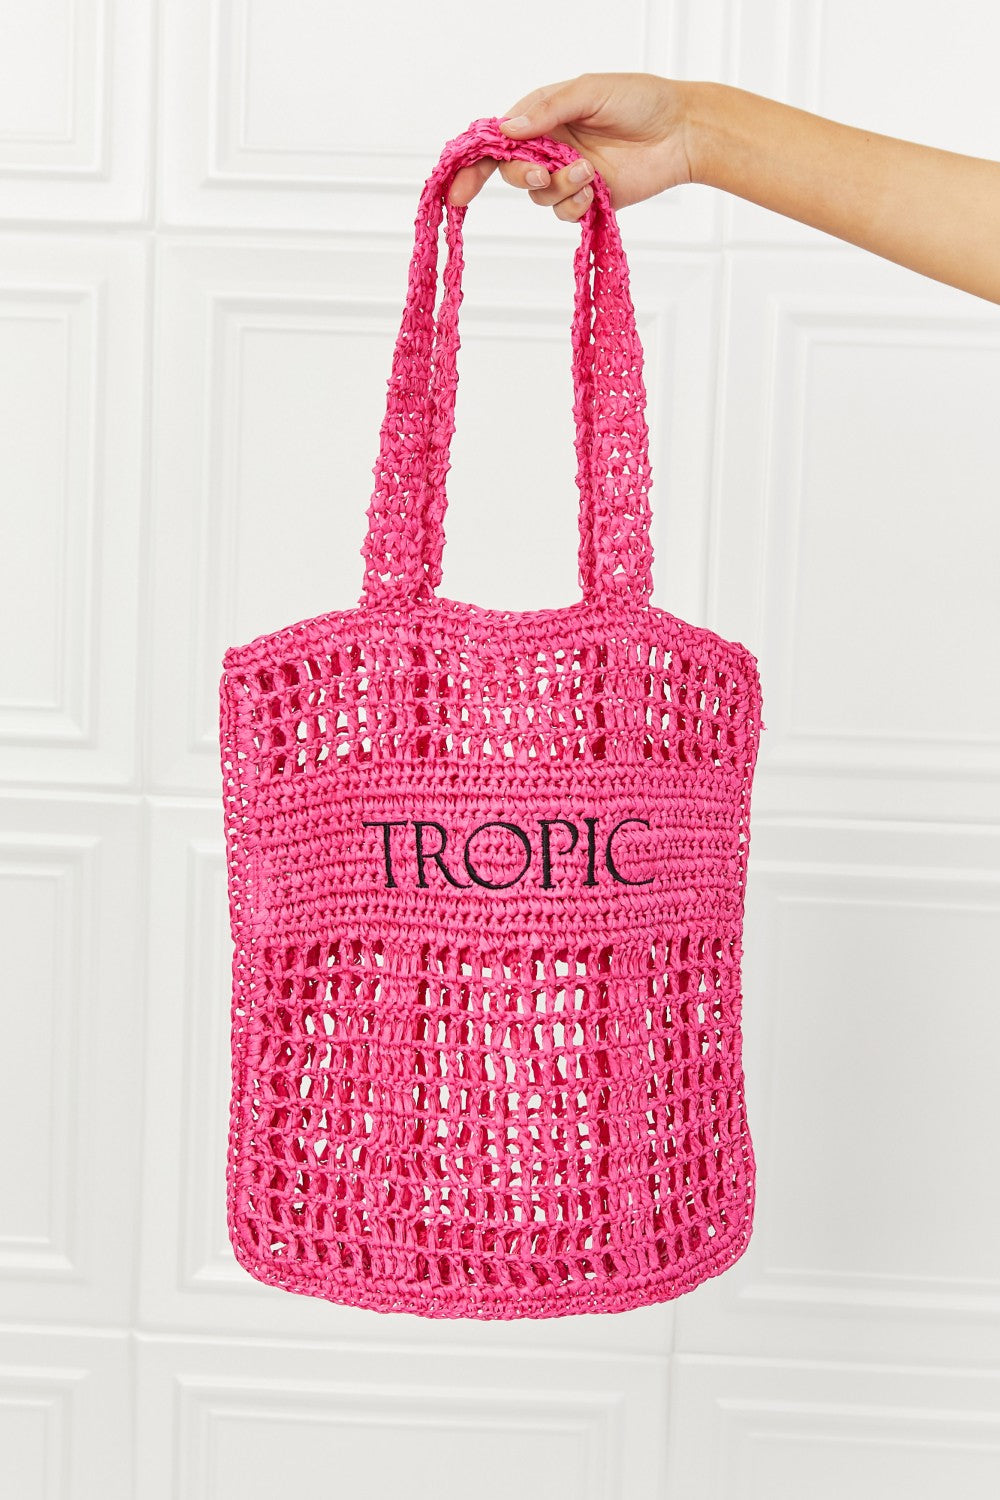 Fame Tropic Babe Staw Tote Bag - Tigbul's Fashion